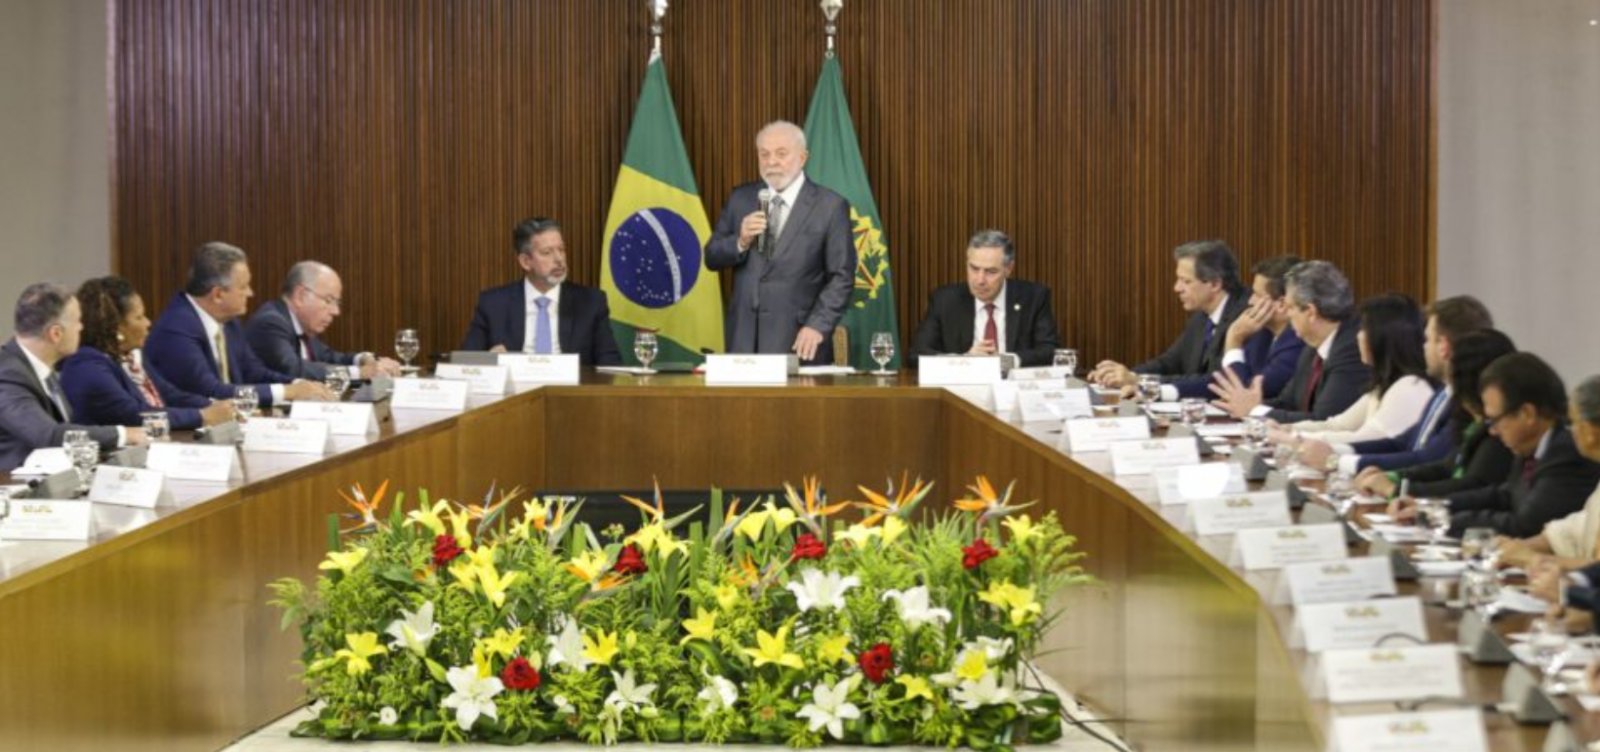 Brasil deve usar presidência do G20 para propor reforma ao FMI